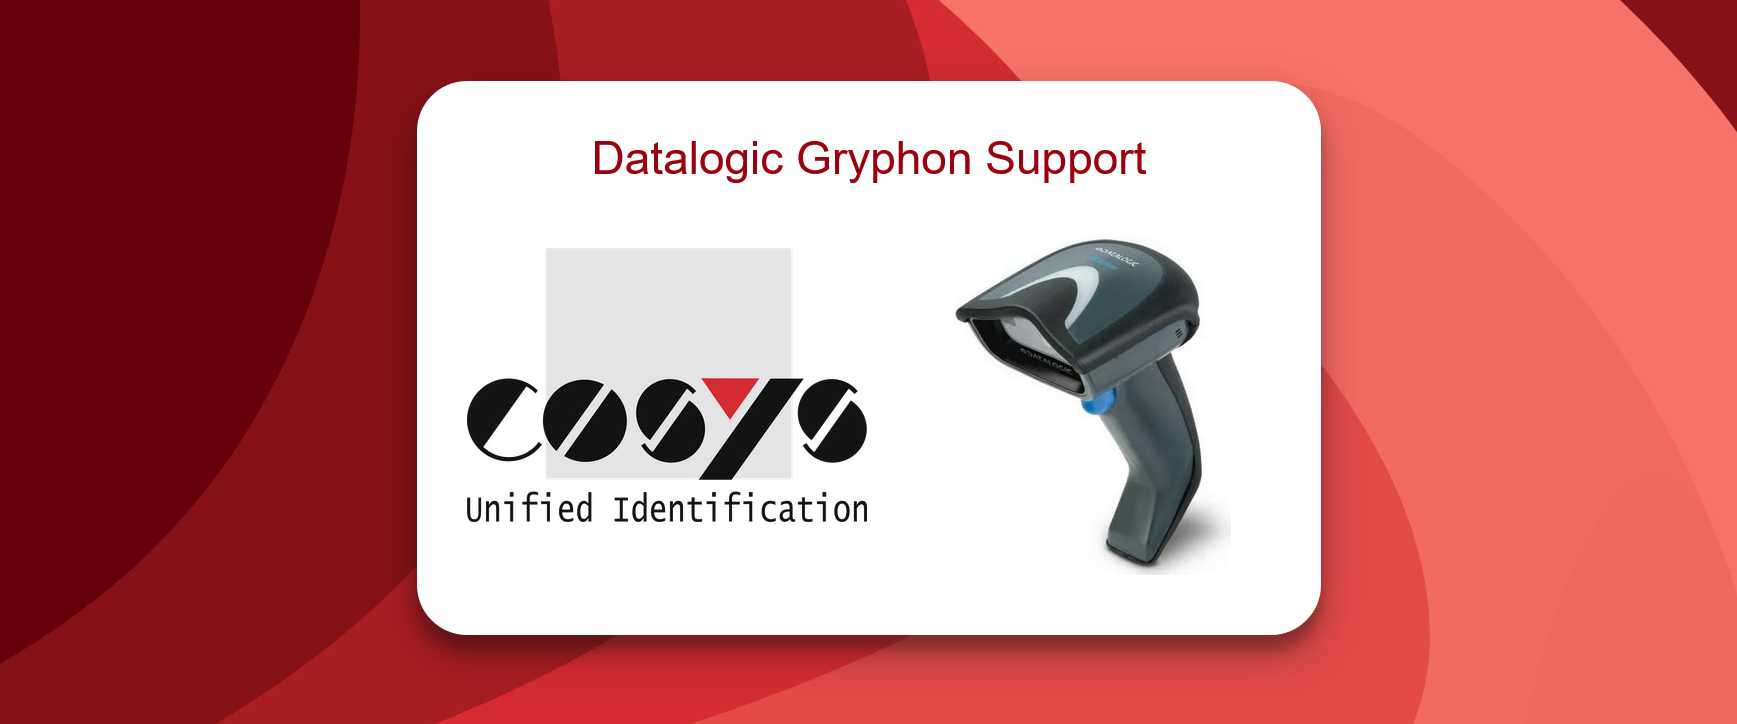 Datalogic Gryphon Support